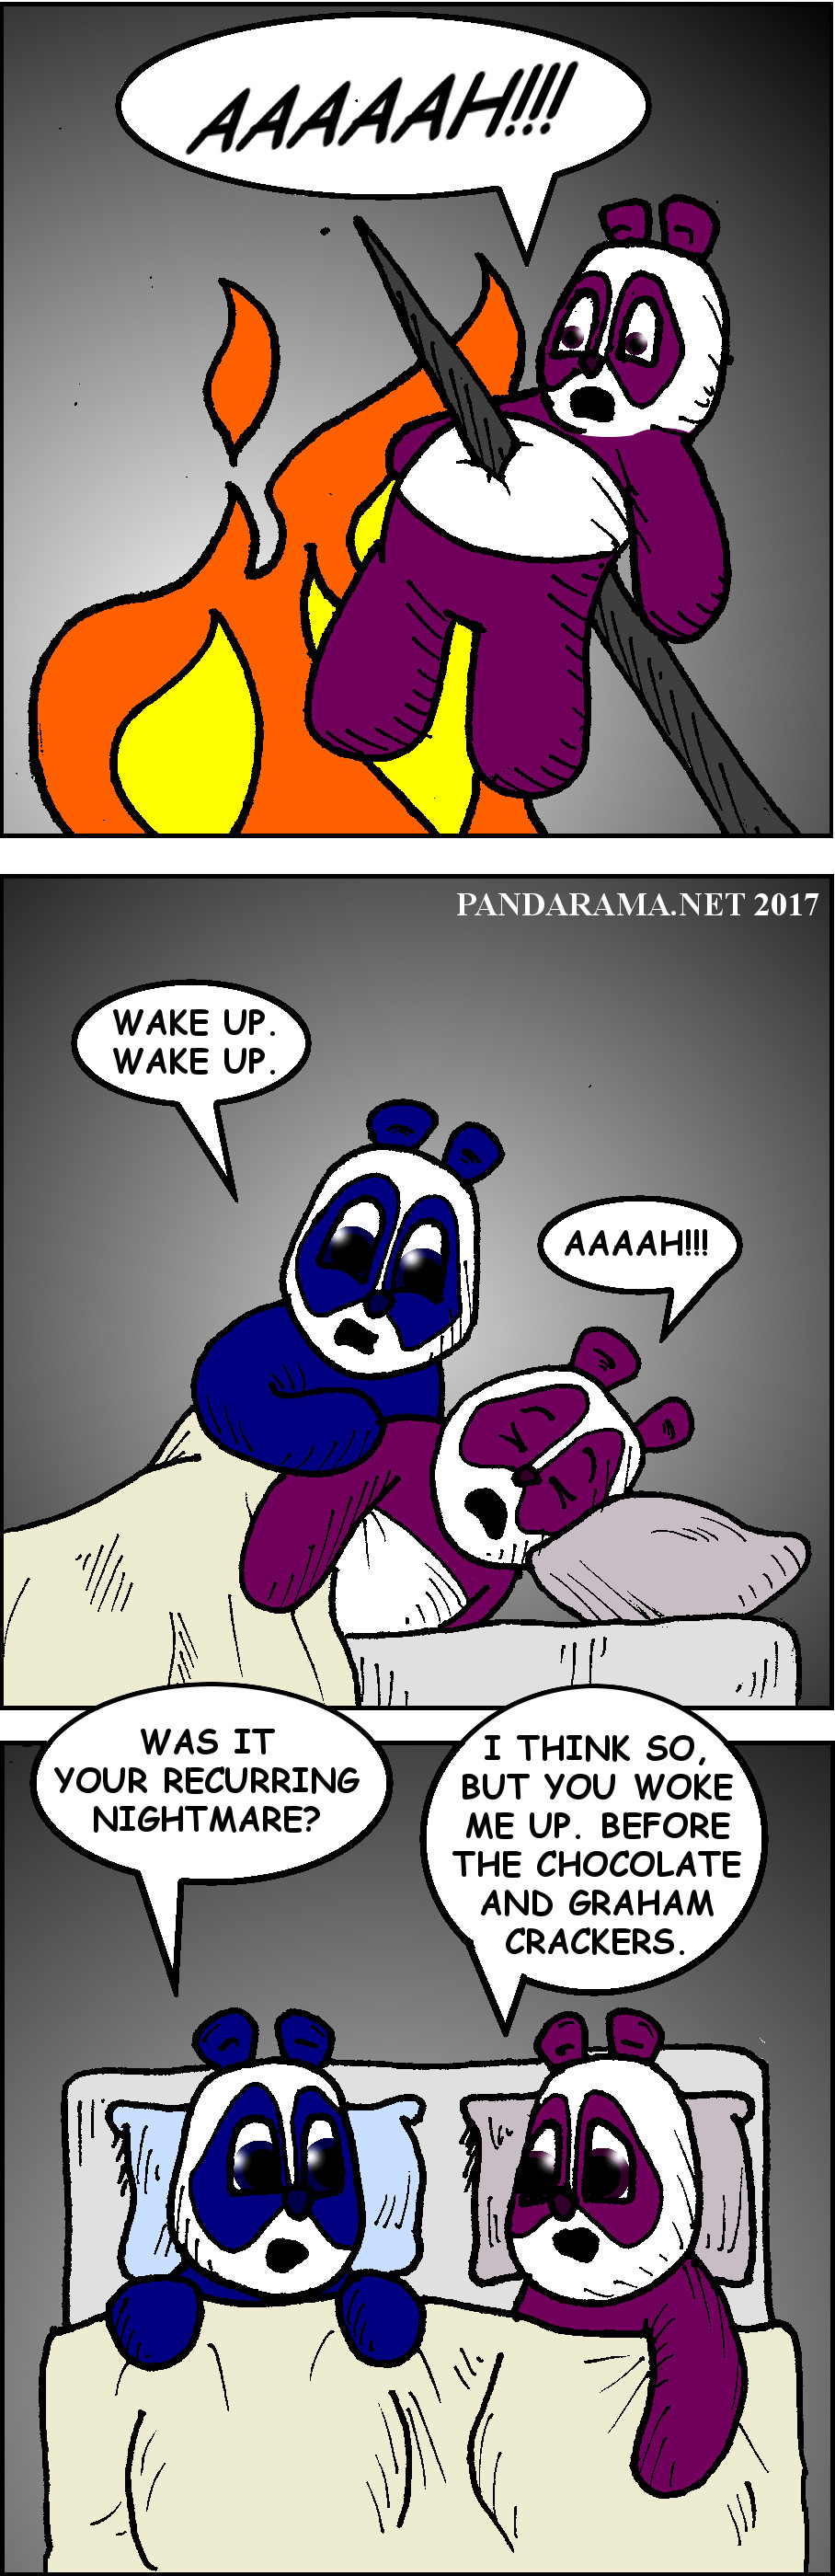 panda has recurring nightmare about being a marshmallow in smore. pandarama comics.